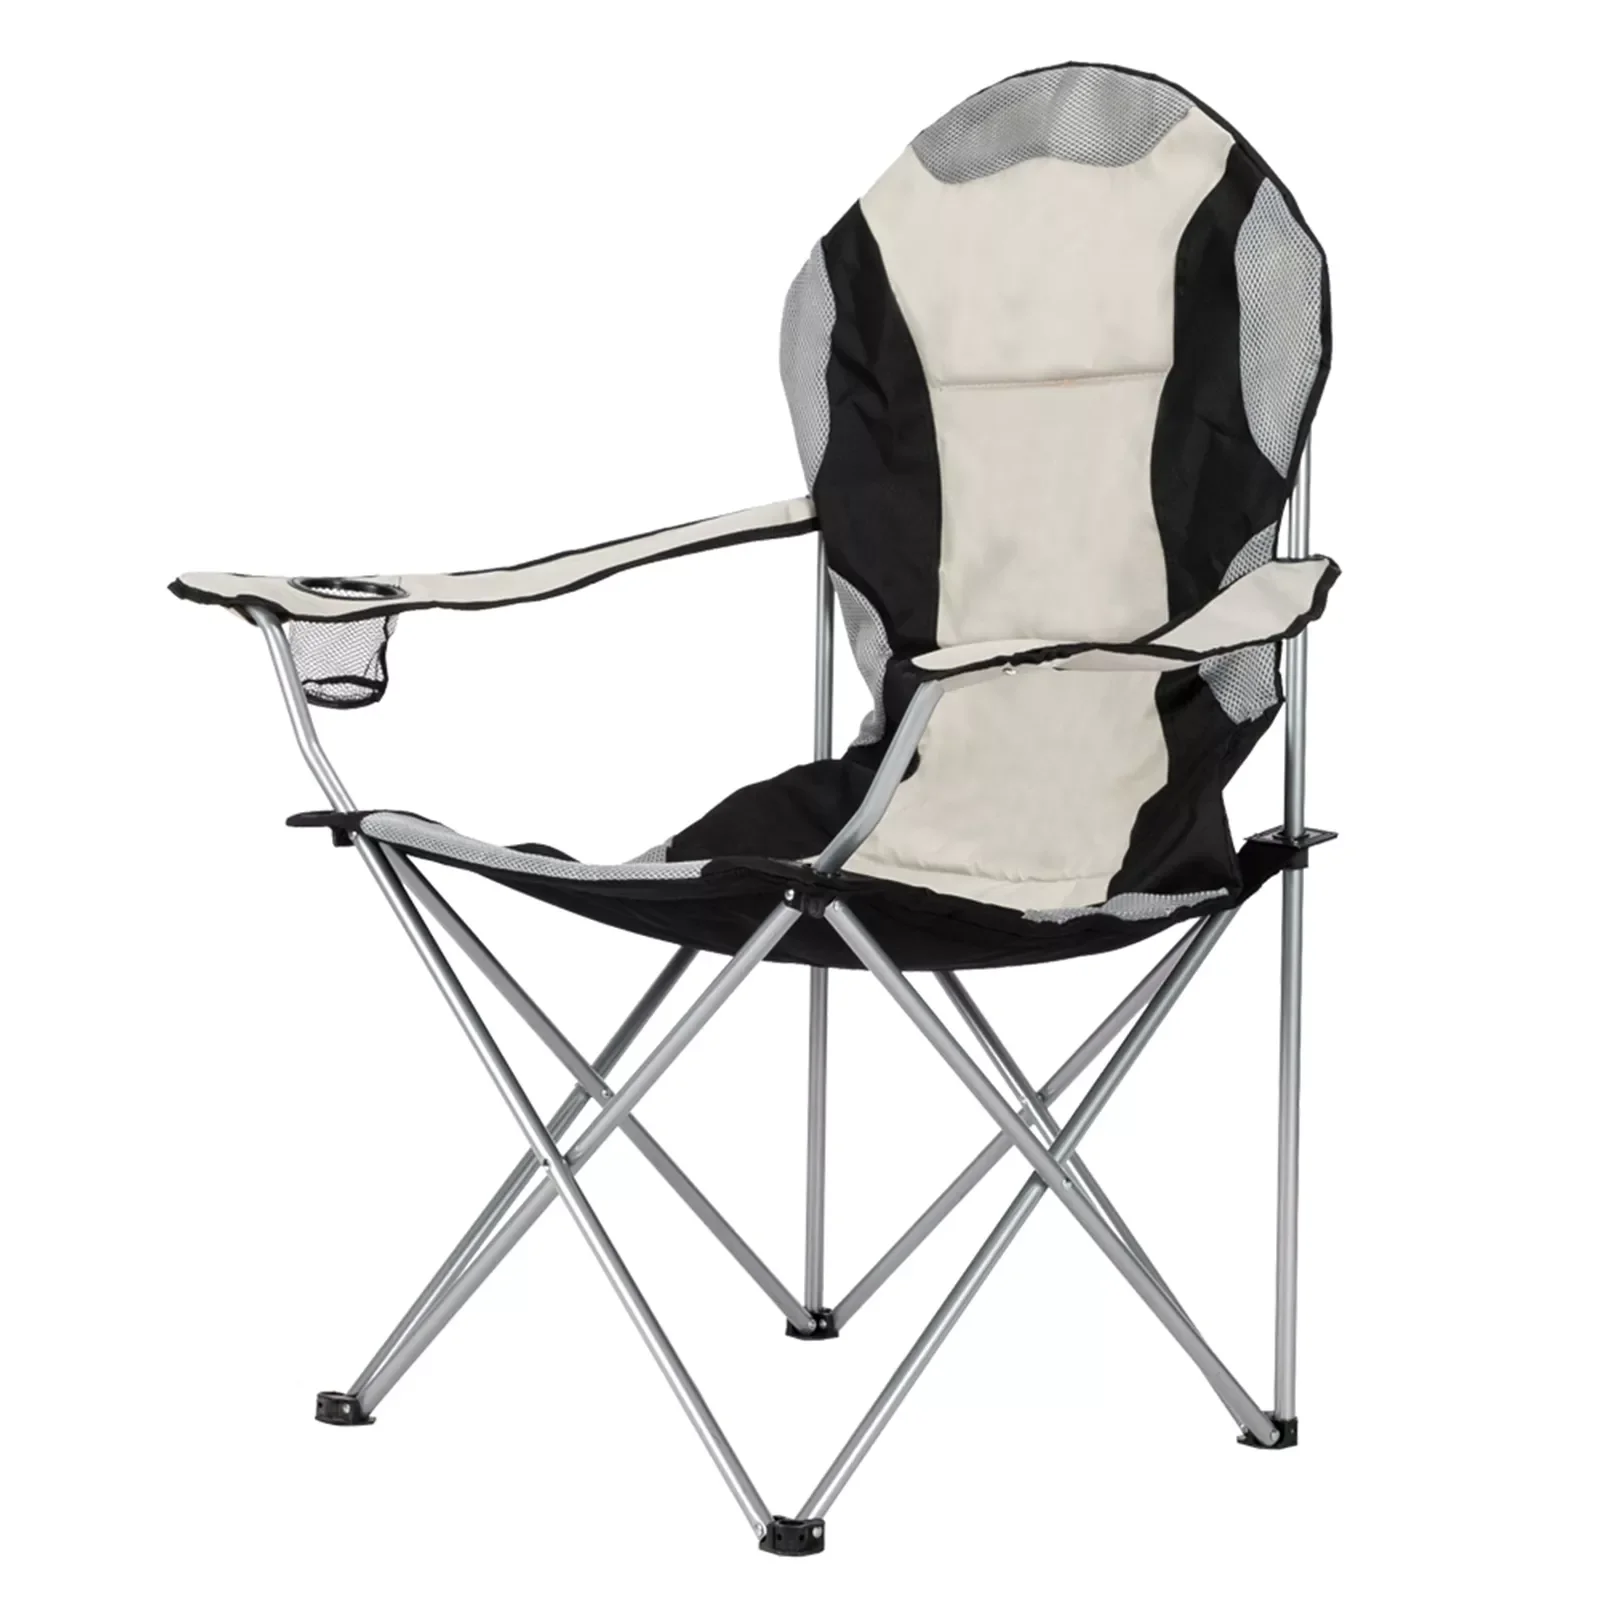 

Medium Portable Camping Chair Fishing Chair Folding Chair for Sunbathing Black Gray[US-Stock]